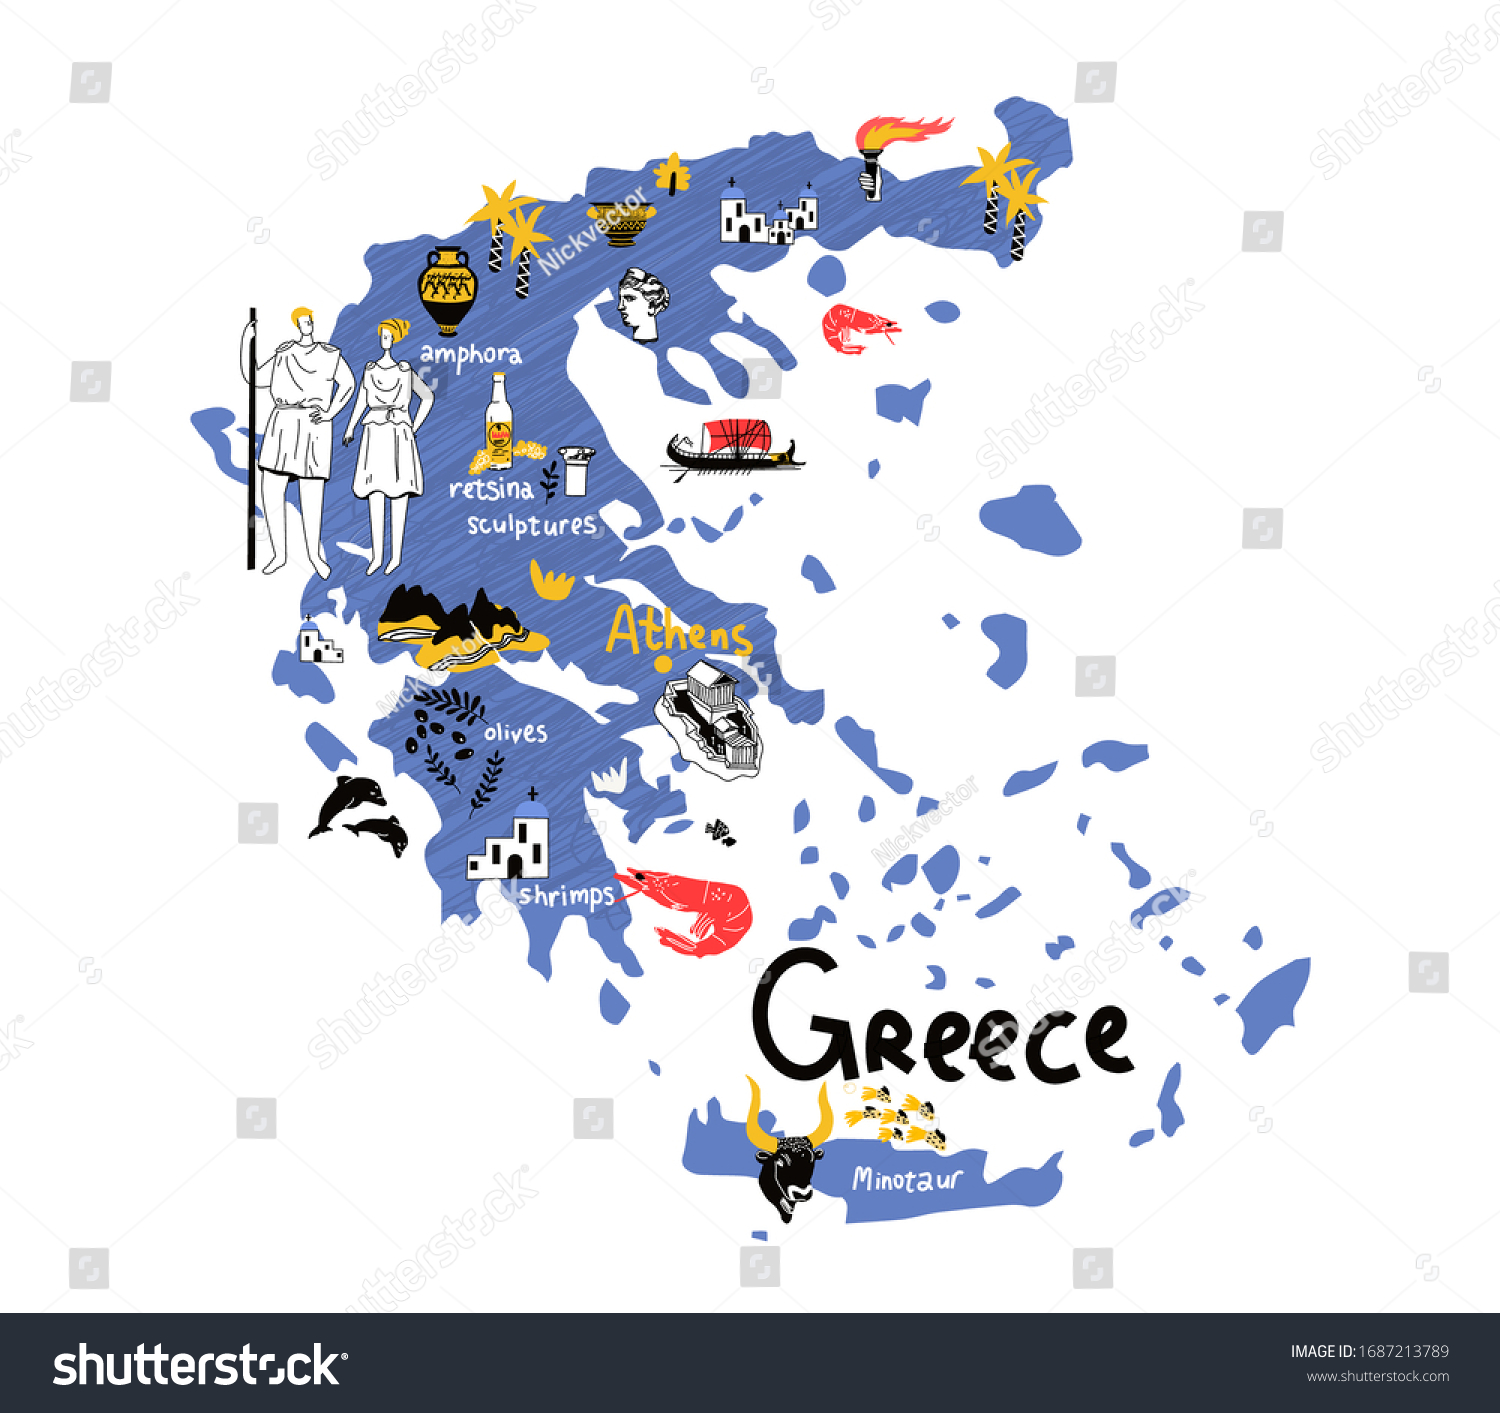 1,272 Map greece cartoon Images, Stock Photos & Vectors | Shutterstock